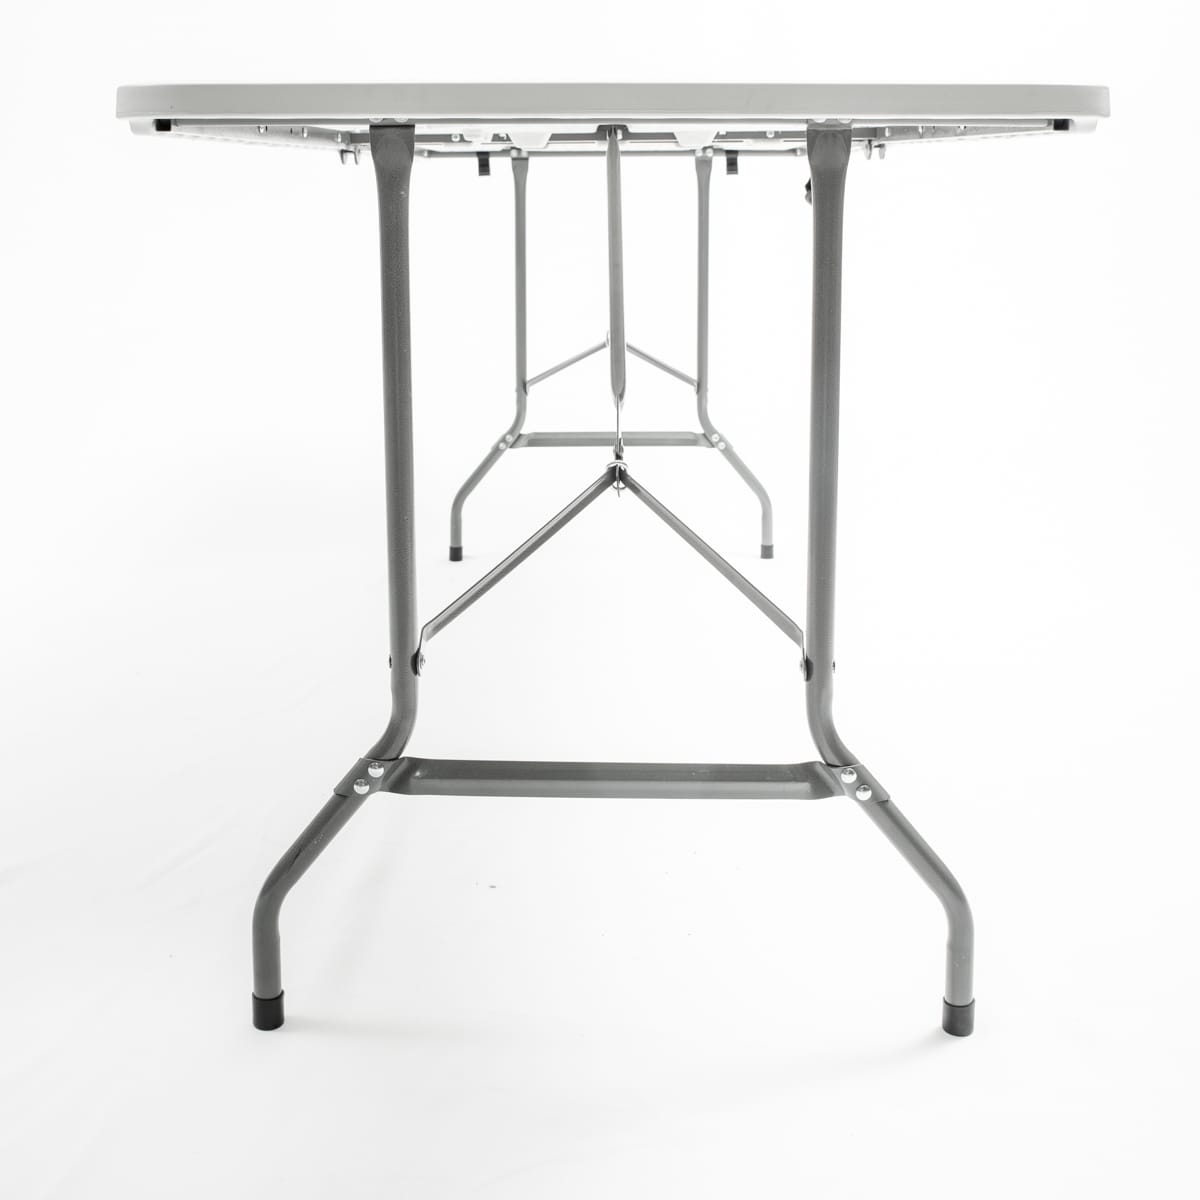 1.8m Folding Trestle Plastic Table 6ft White